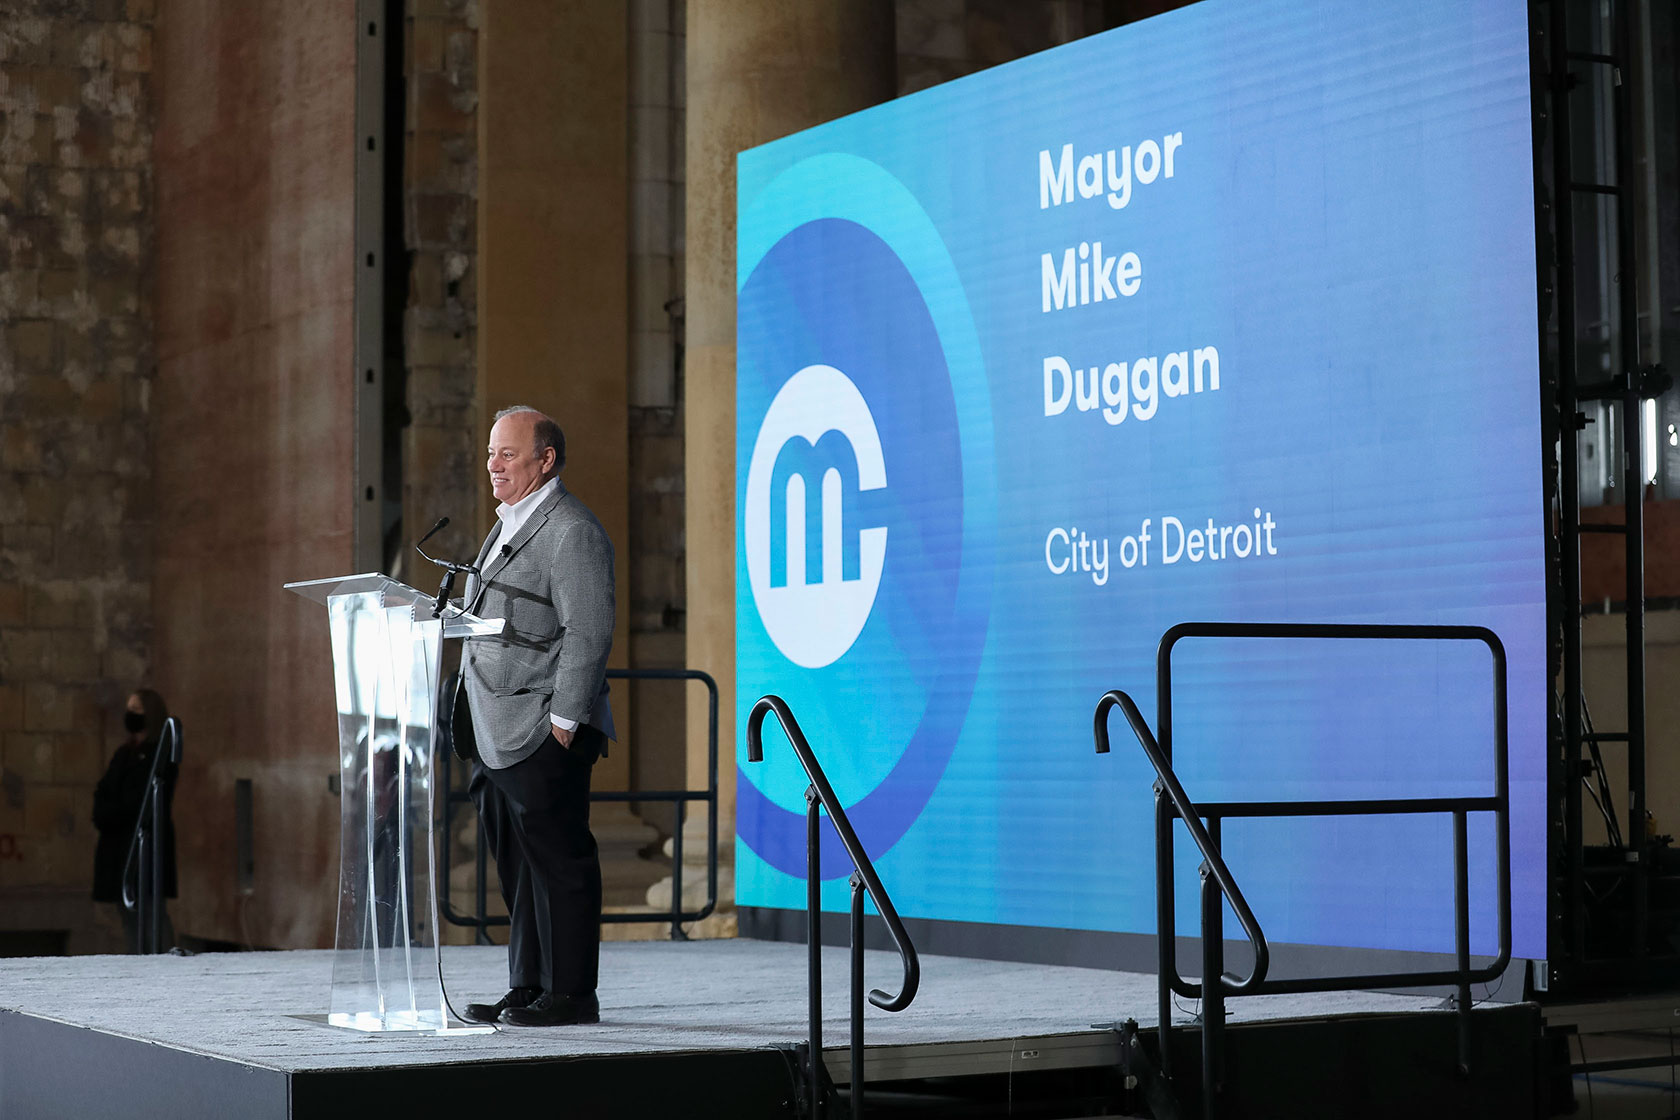 Detroit mayor Mike Duggan at the Michigan Central Founding Member and Partnership Announcement